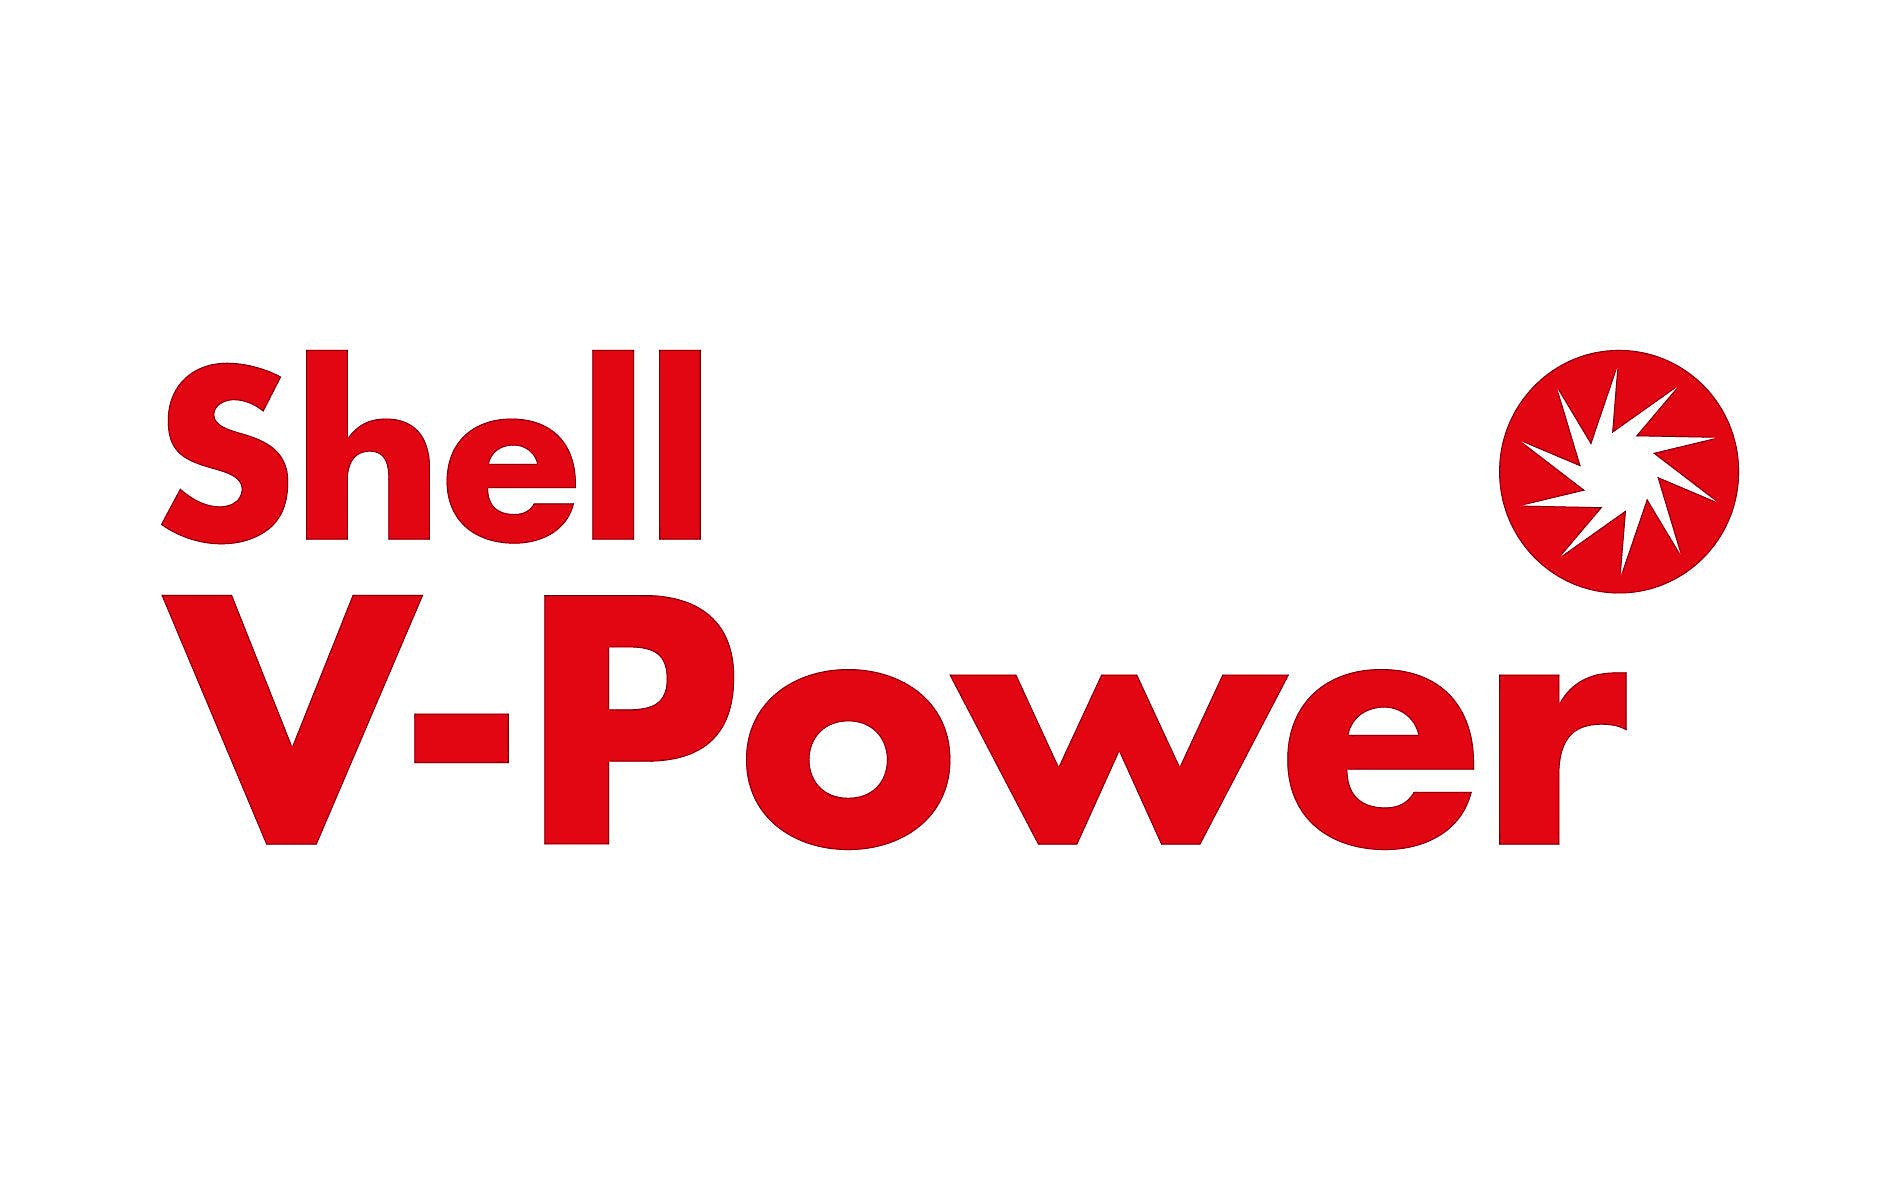 Пауэр шелл. Shell v Power 95. Логотип v-Power. Логотип Шелл. Надпись Shell v-Power.